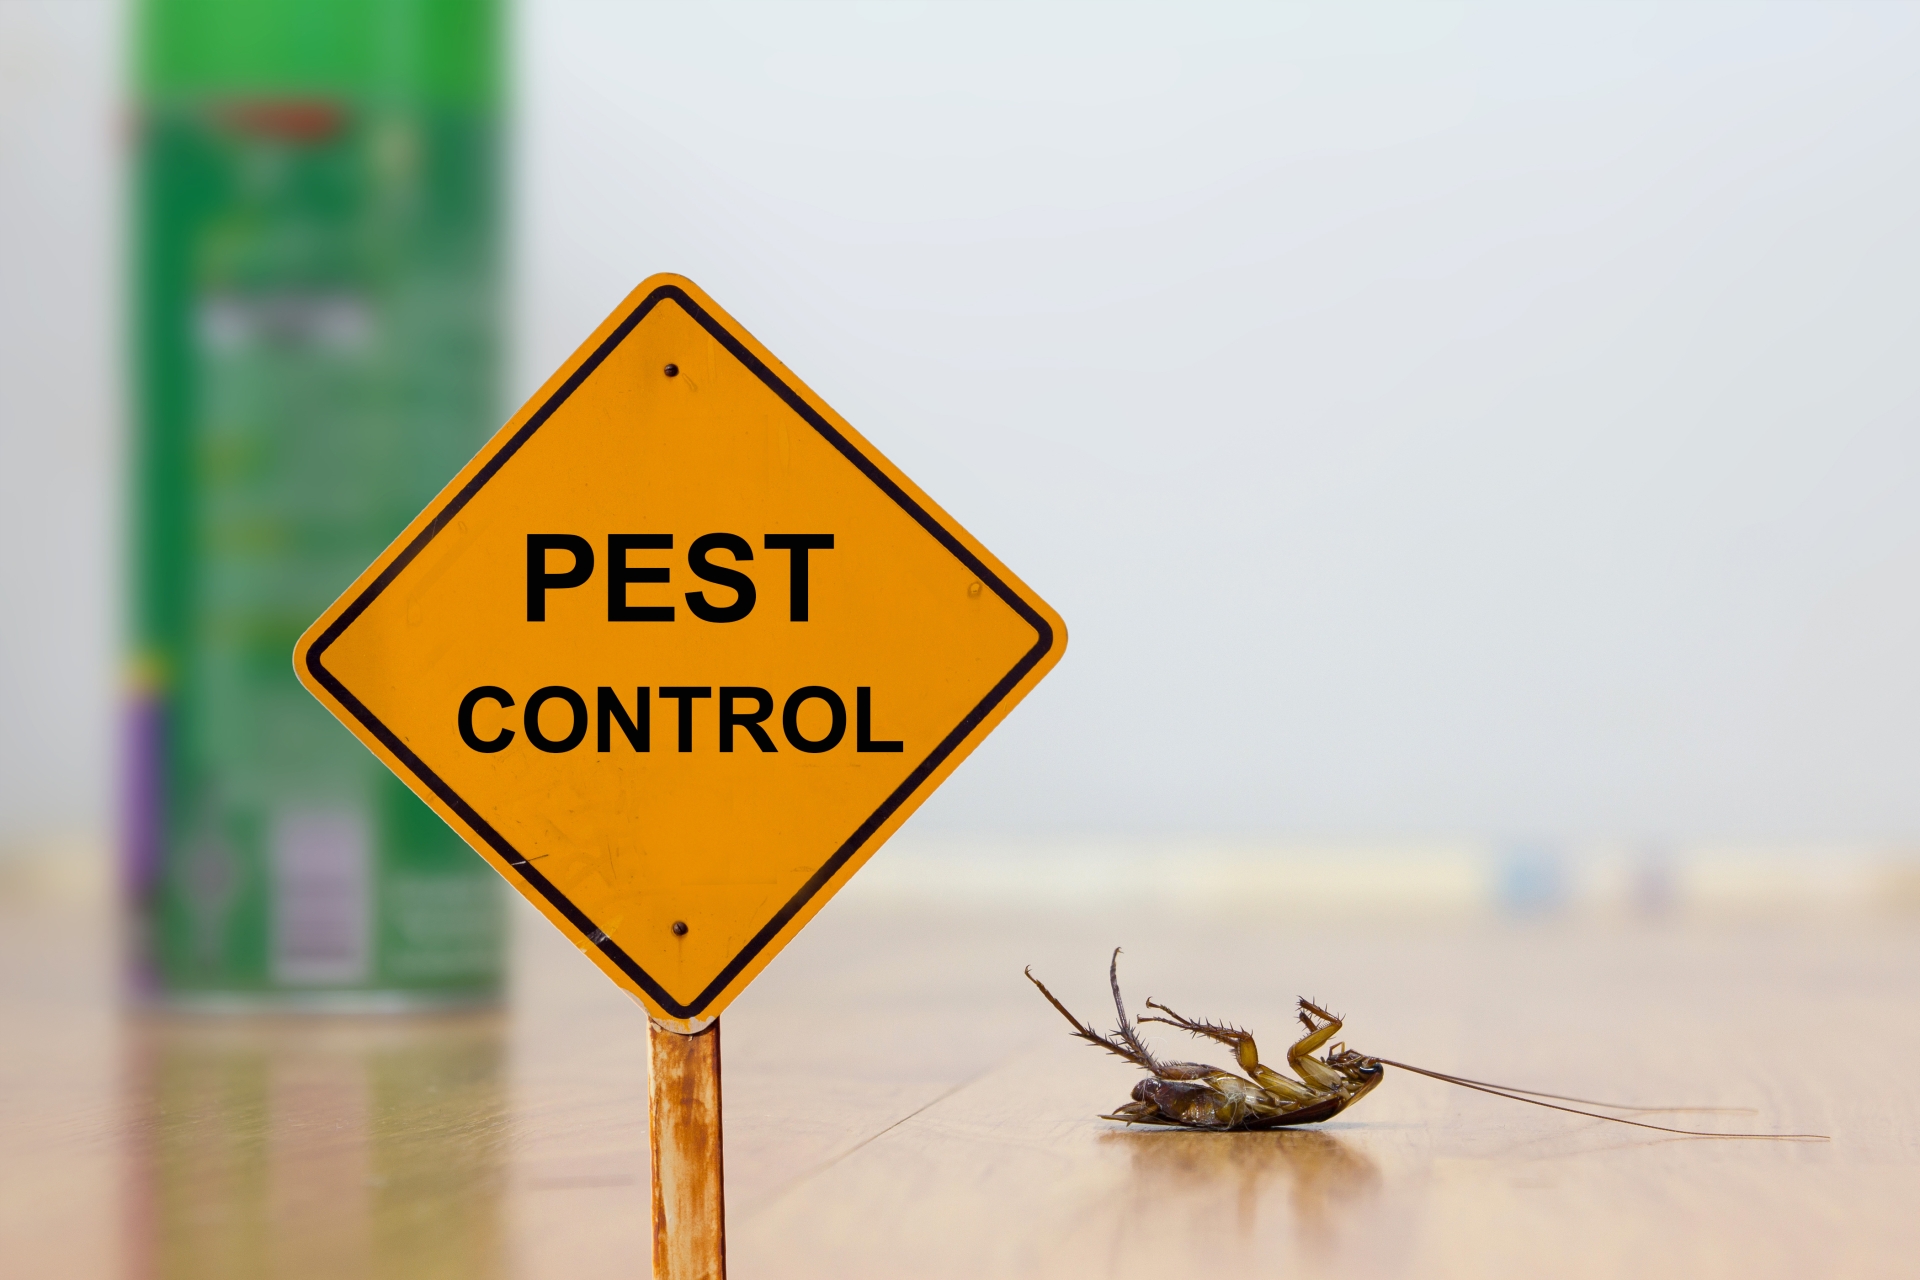 24 Hour Pest Control, Pest Control in Deptford, SE8. Call Now 020 8166 9746